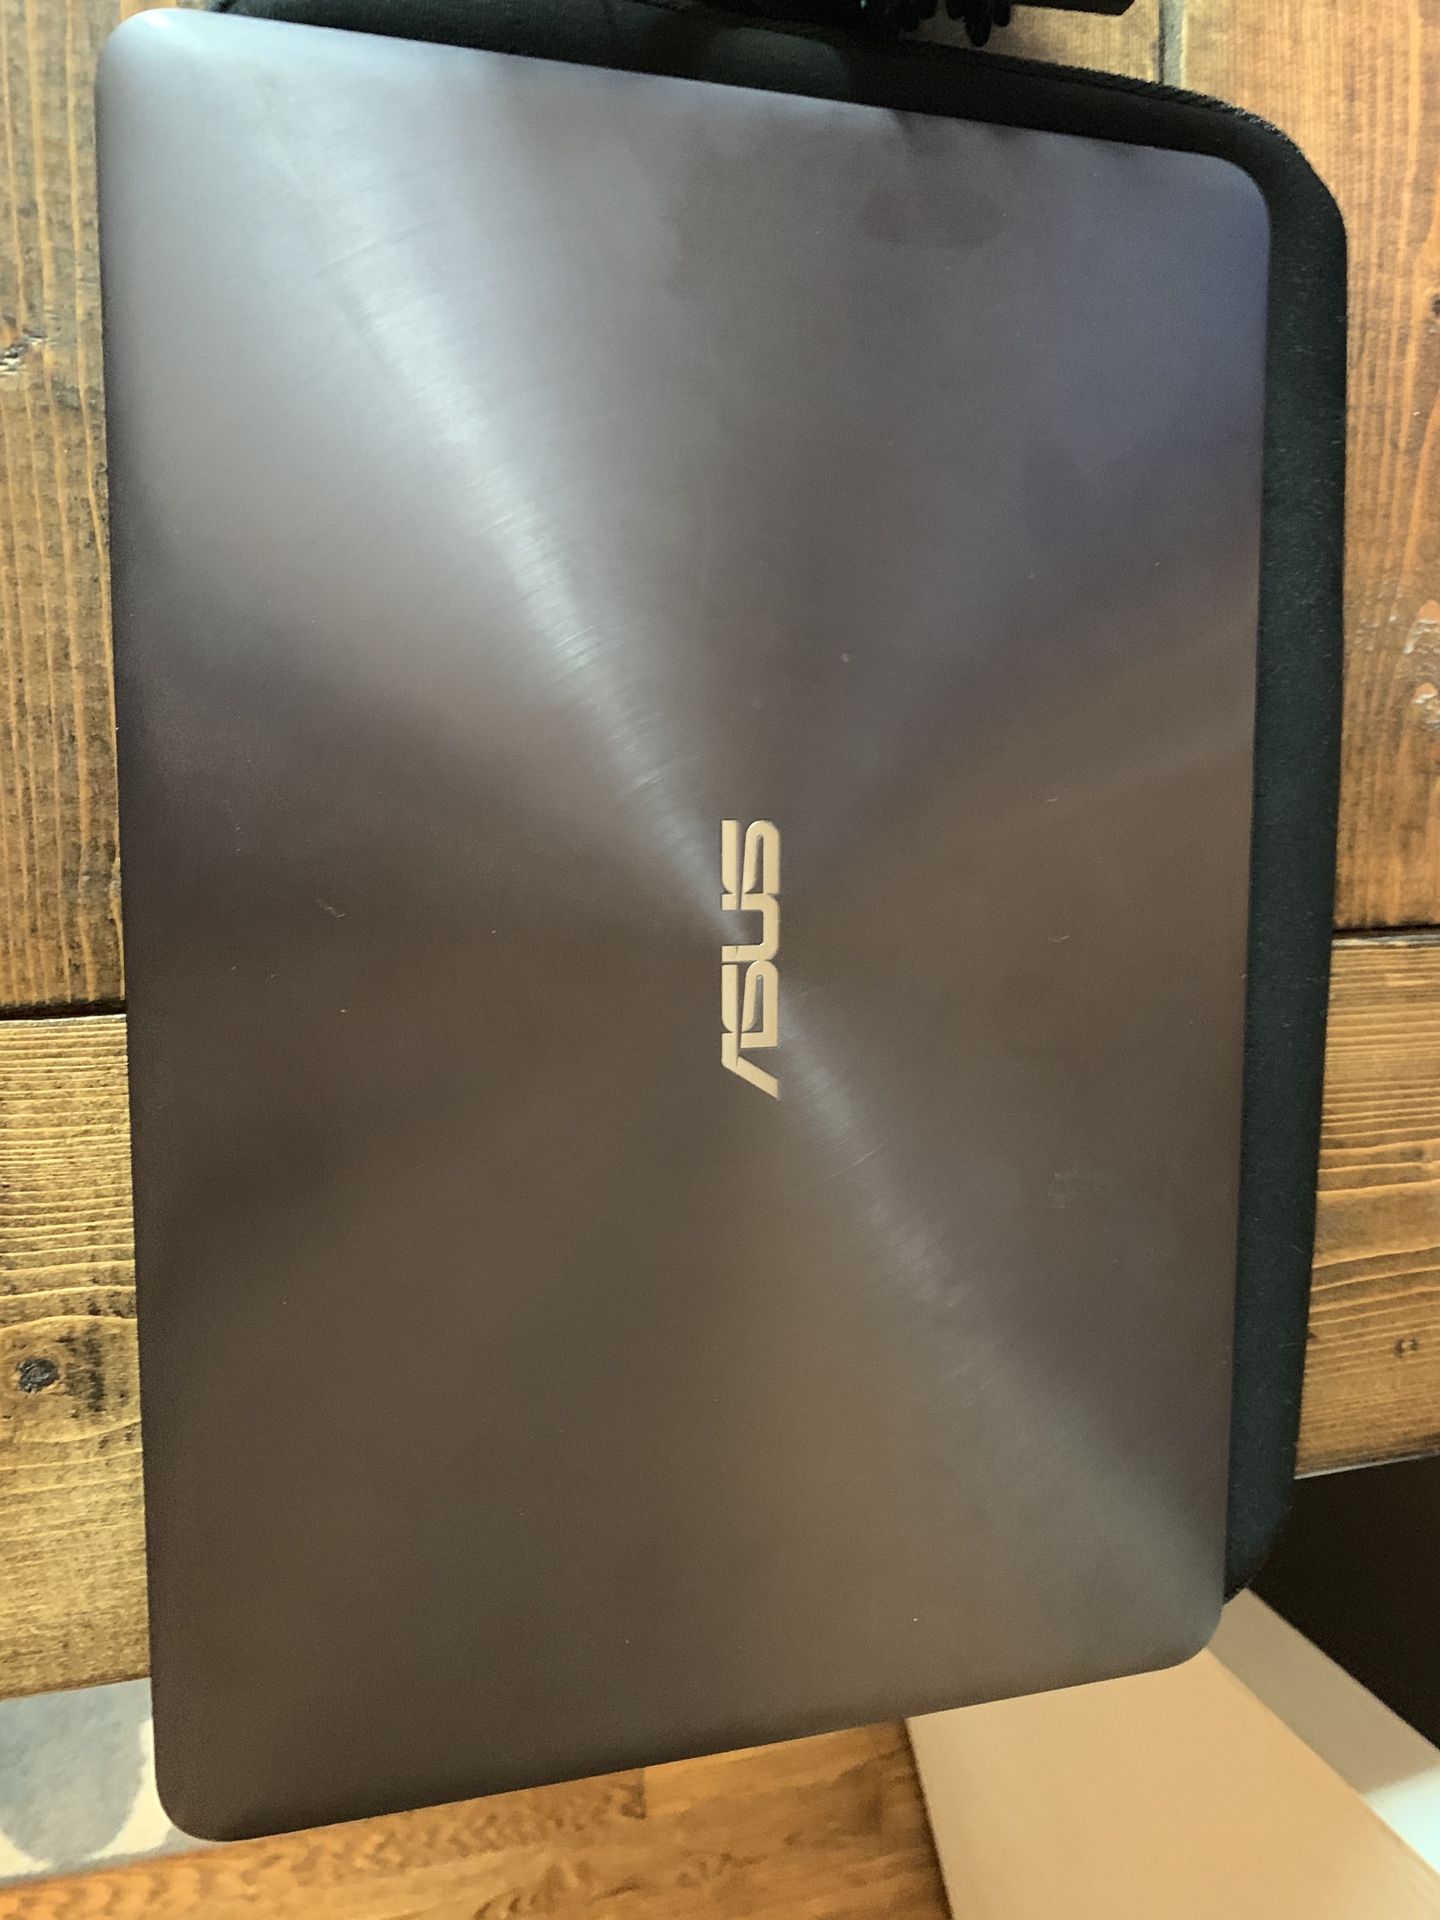 UX305F Asus ultrabook